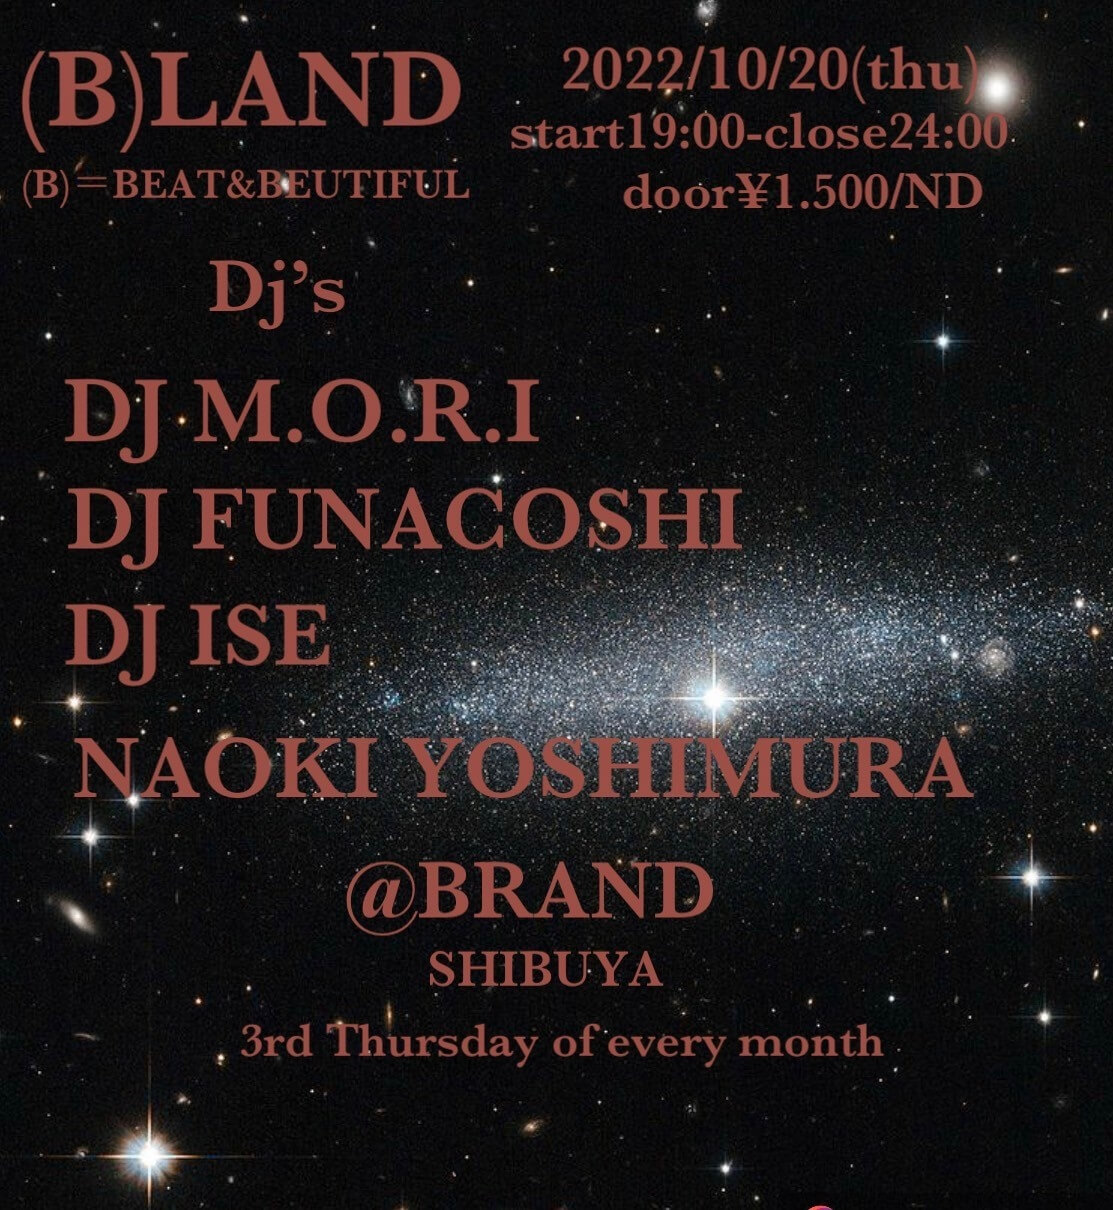 【（B）LAND】 2022年10月20日（木曜日）に渋谷 クラブのBRAND SHIBUYAで開催されるHOUSEイベント